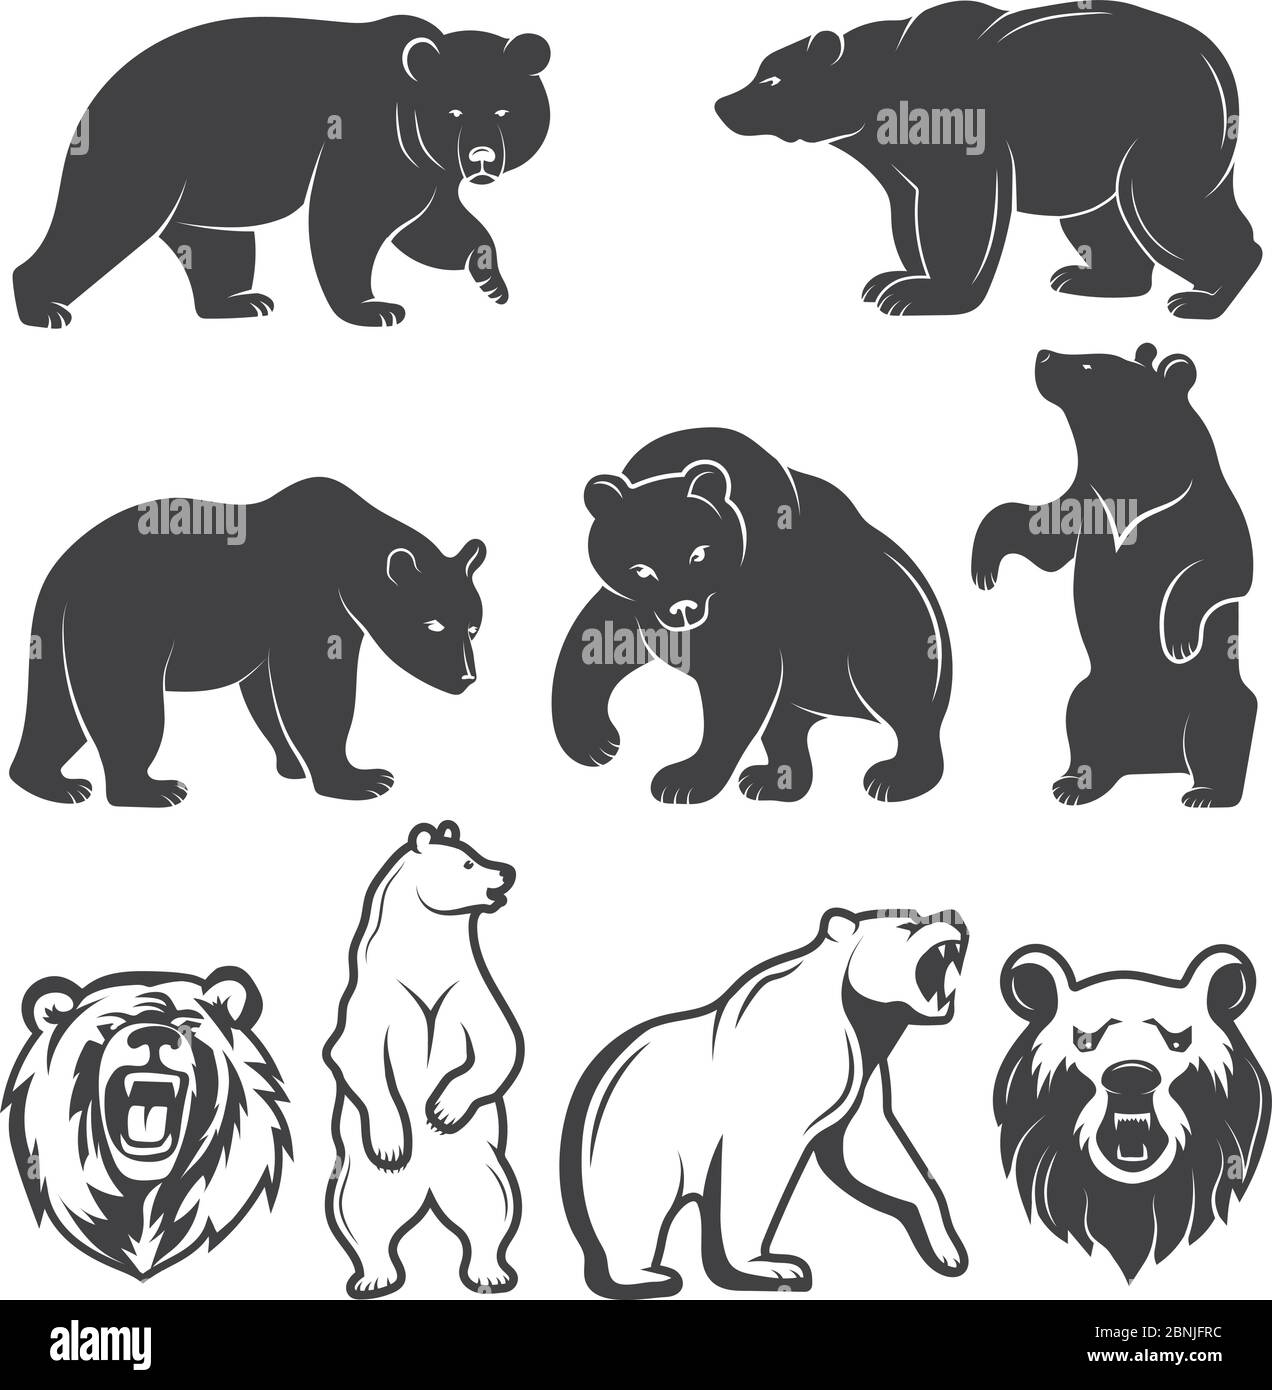 Illustrationen von Bären. Vektortiere Set Stock Vektor